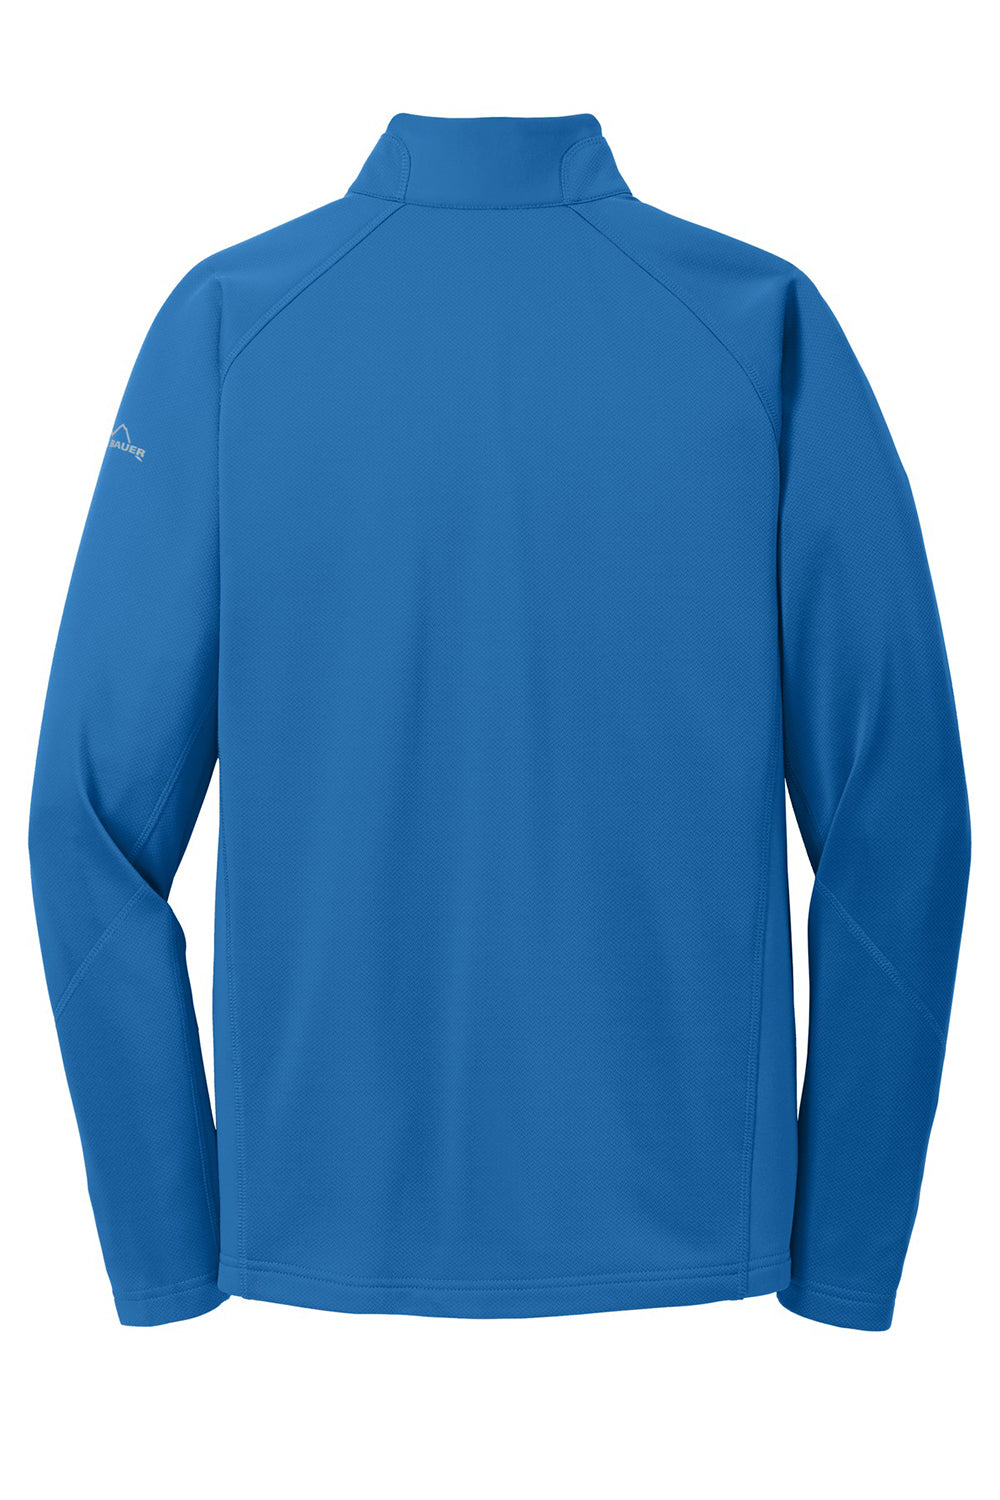 Eddie Bauer EB234 Mens Performance Fleece 1/4 Zip Sweatshirt Ascent Blue Flat Back